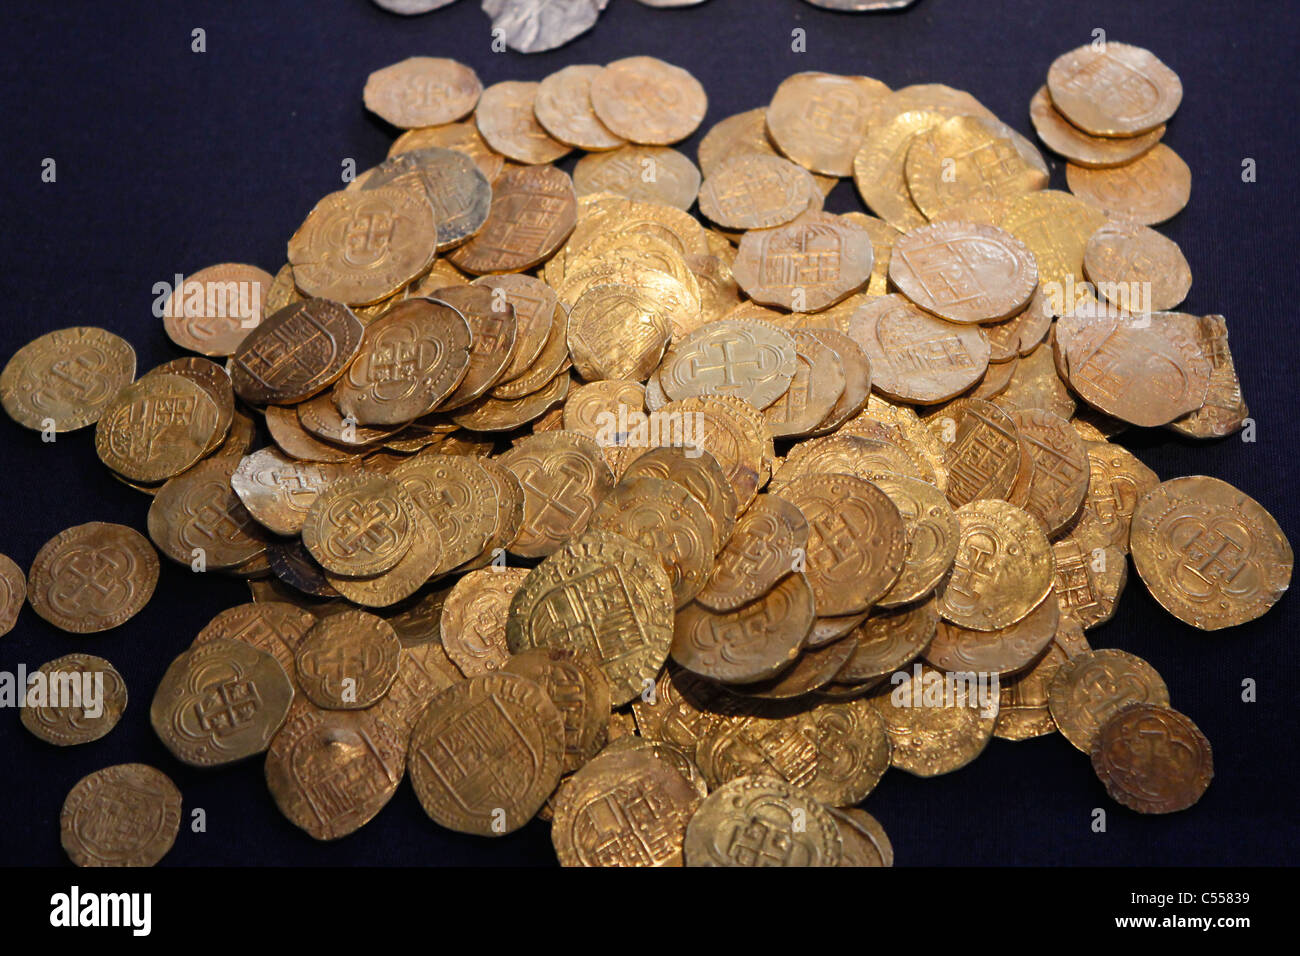 Goldmünzen aus dem Wrack der spanischen Armada Galeone La Girona, heute im Ulster Museum, Belfast, UK Stockfoto